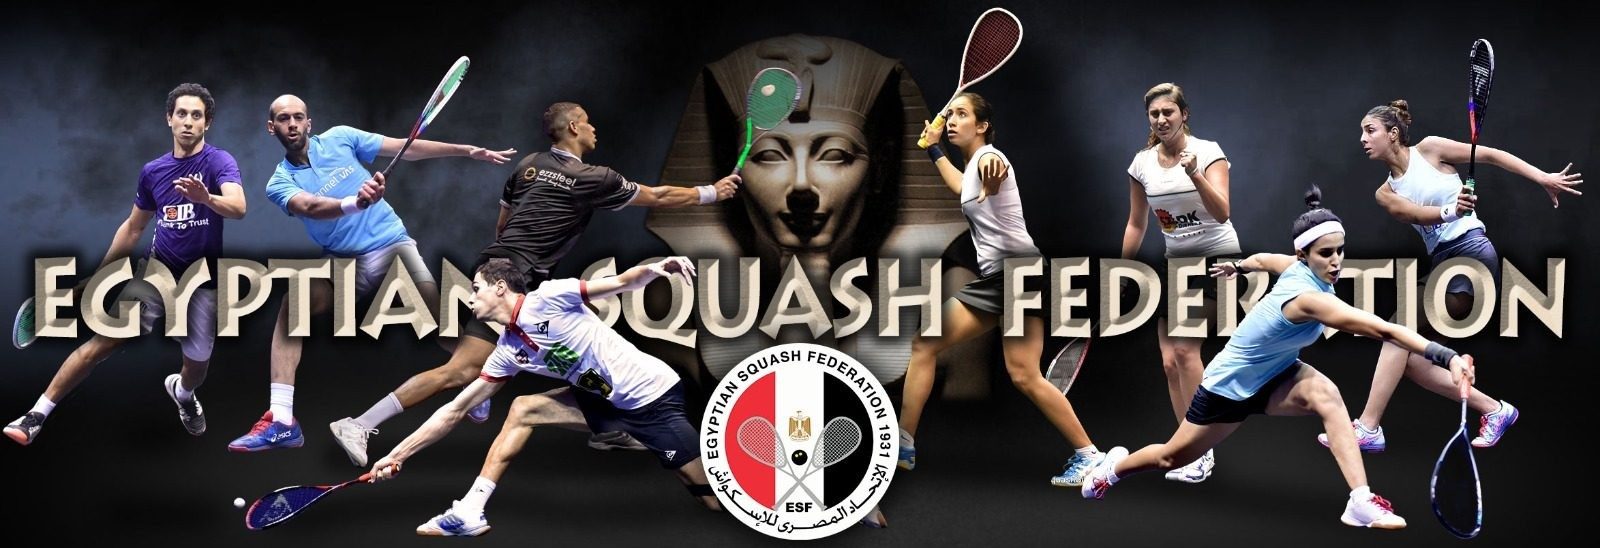 Egyptian Squash Federation